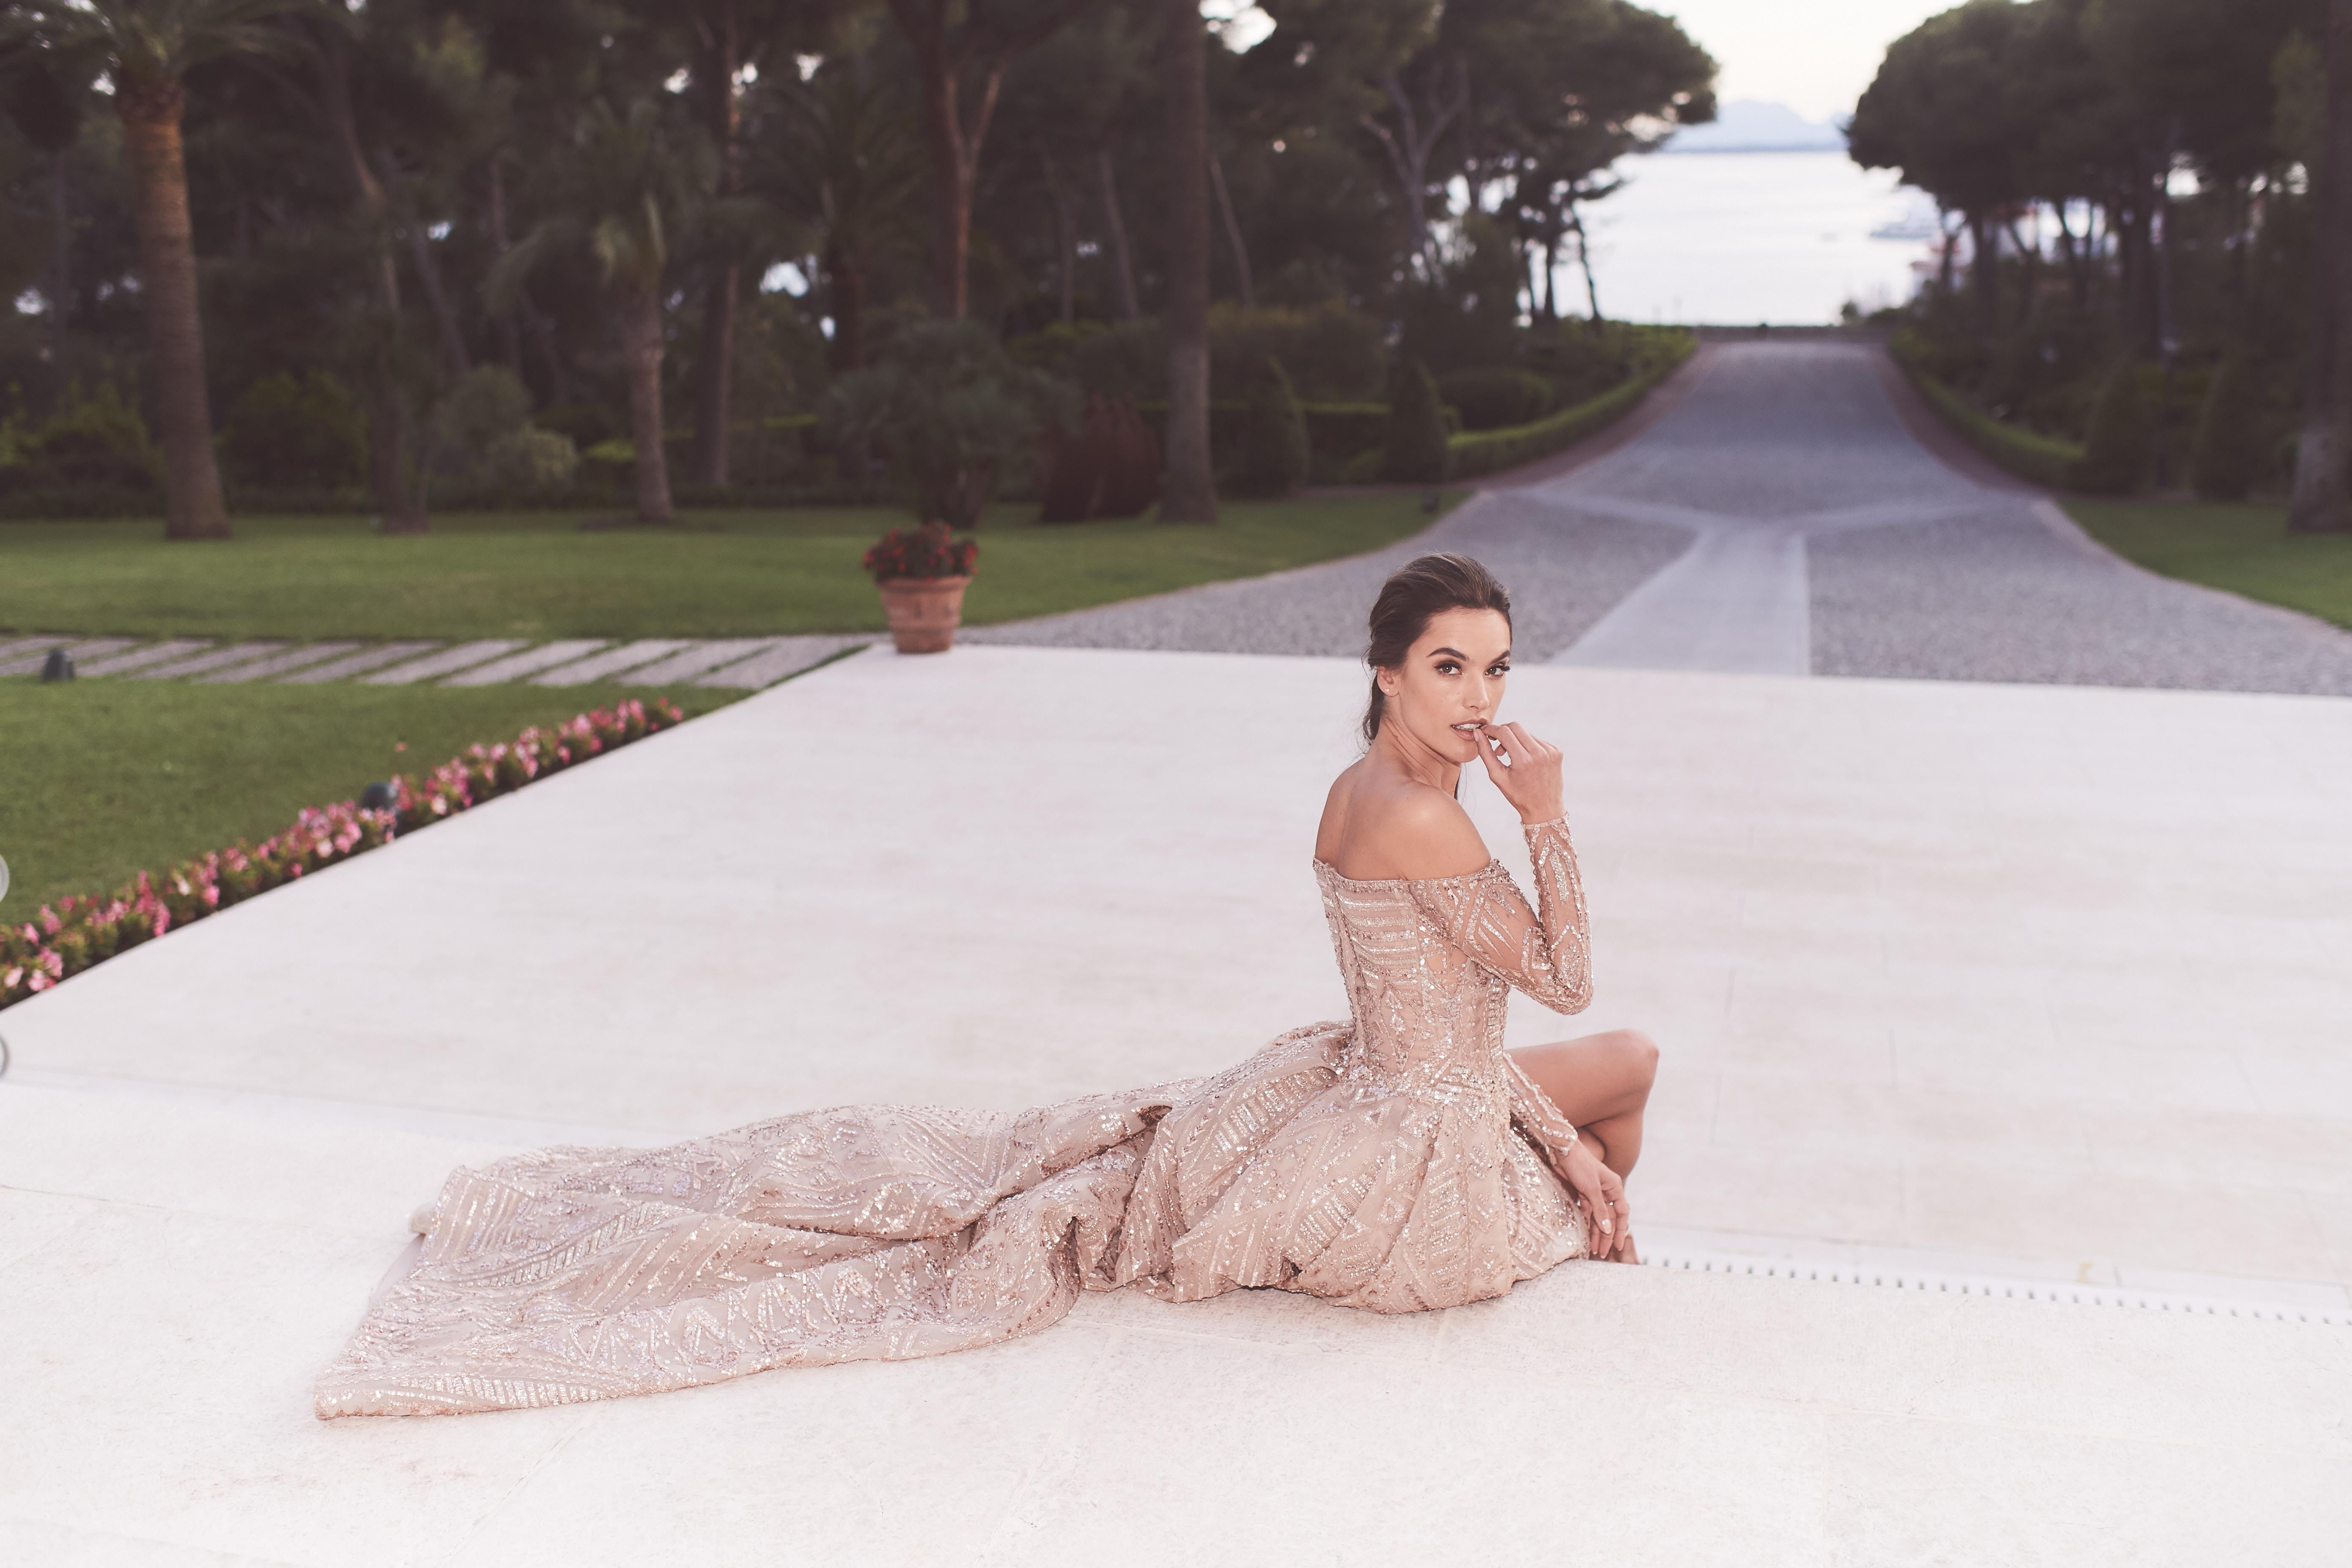 Celebrity Model Alessandra Ambrosio Bare Shoulders Dress Finger On Lips Looking Over Shoulder Road W 5568x3712